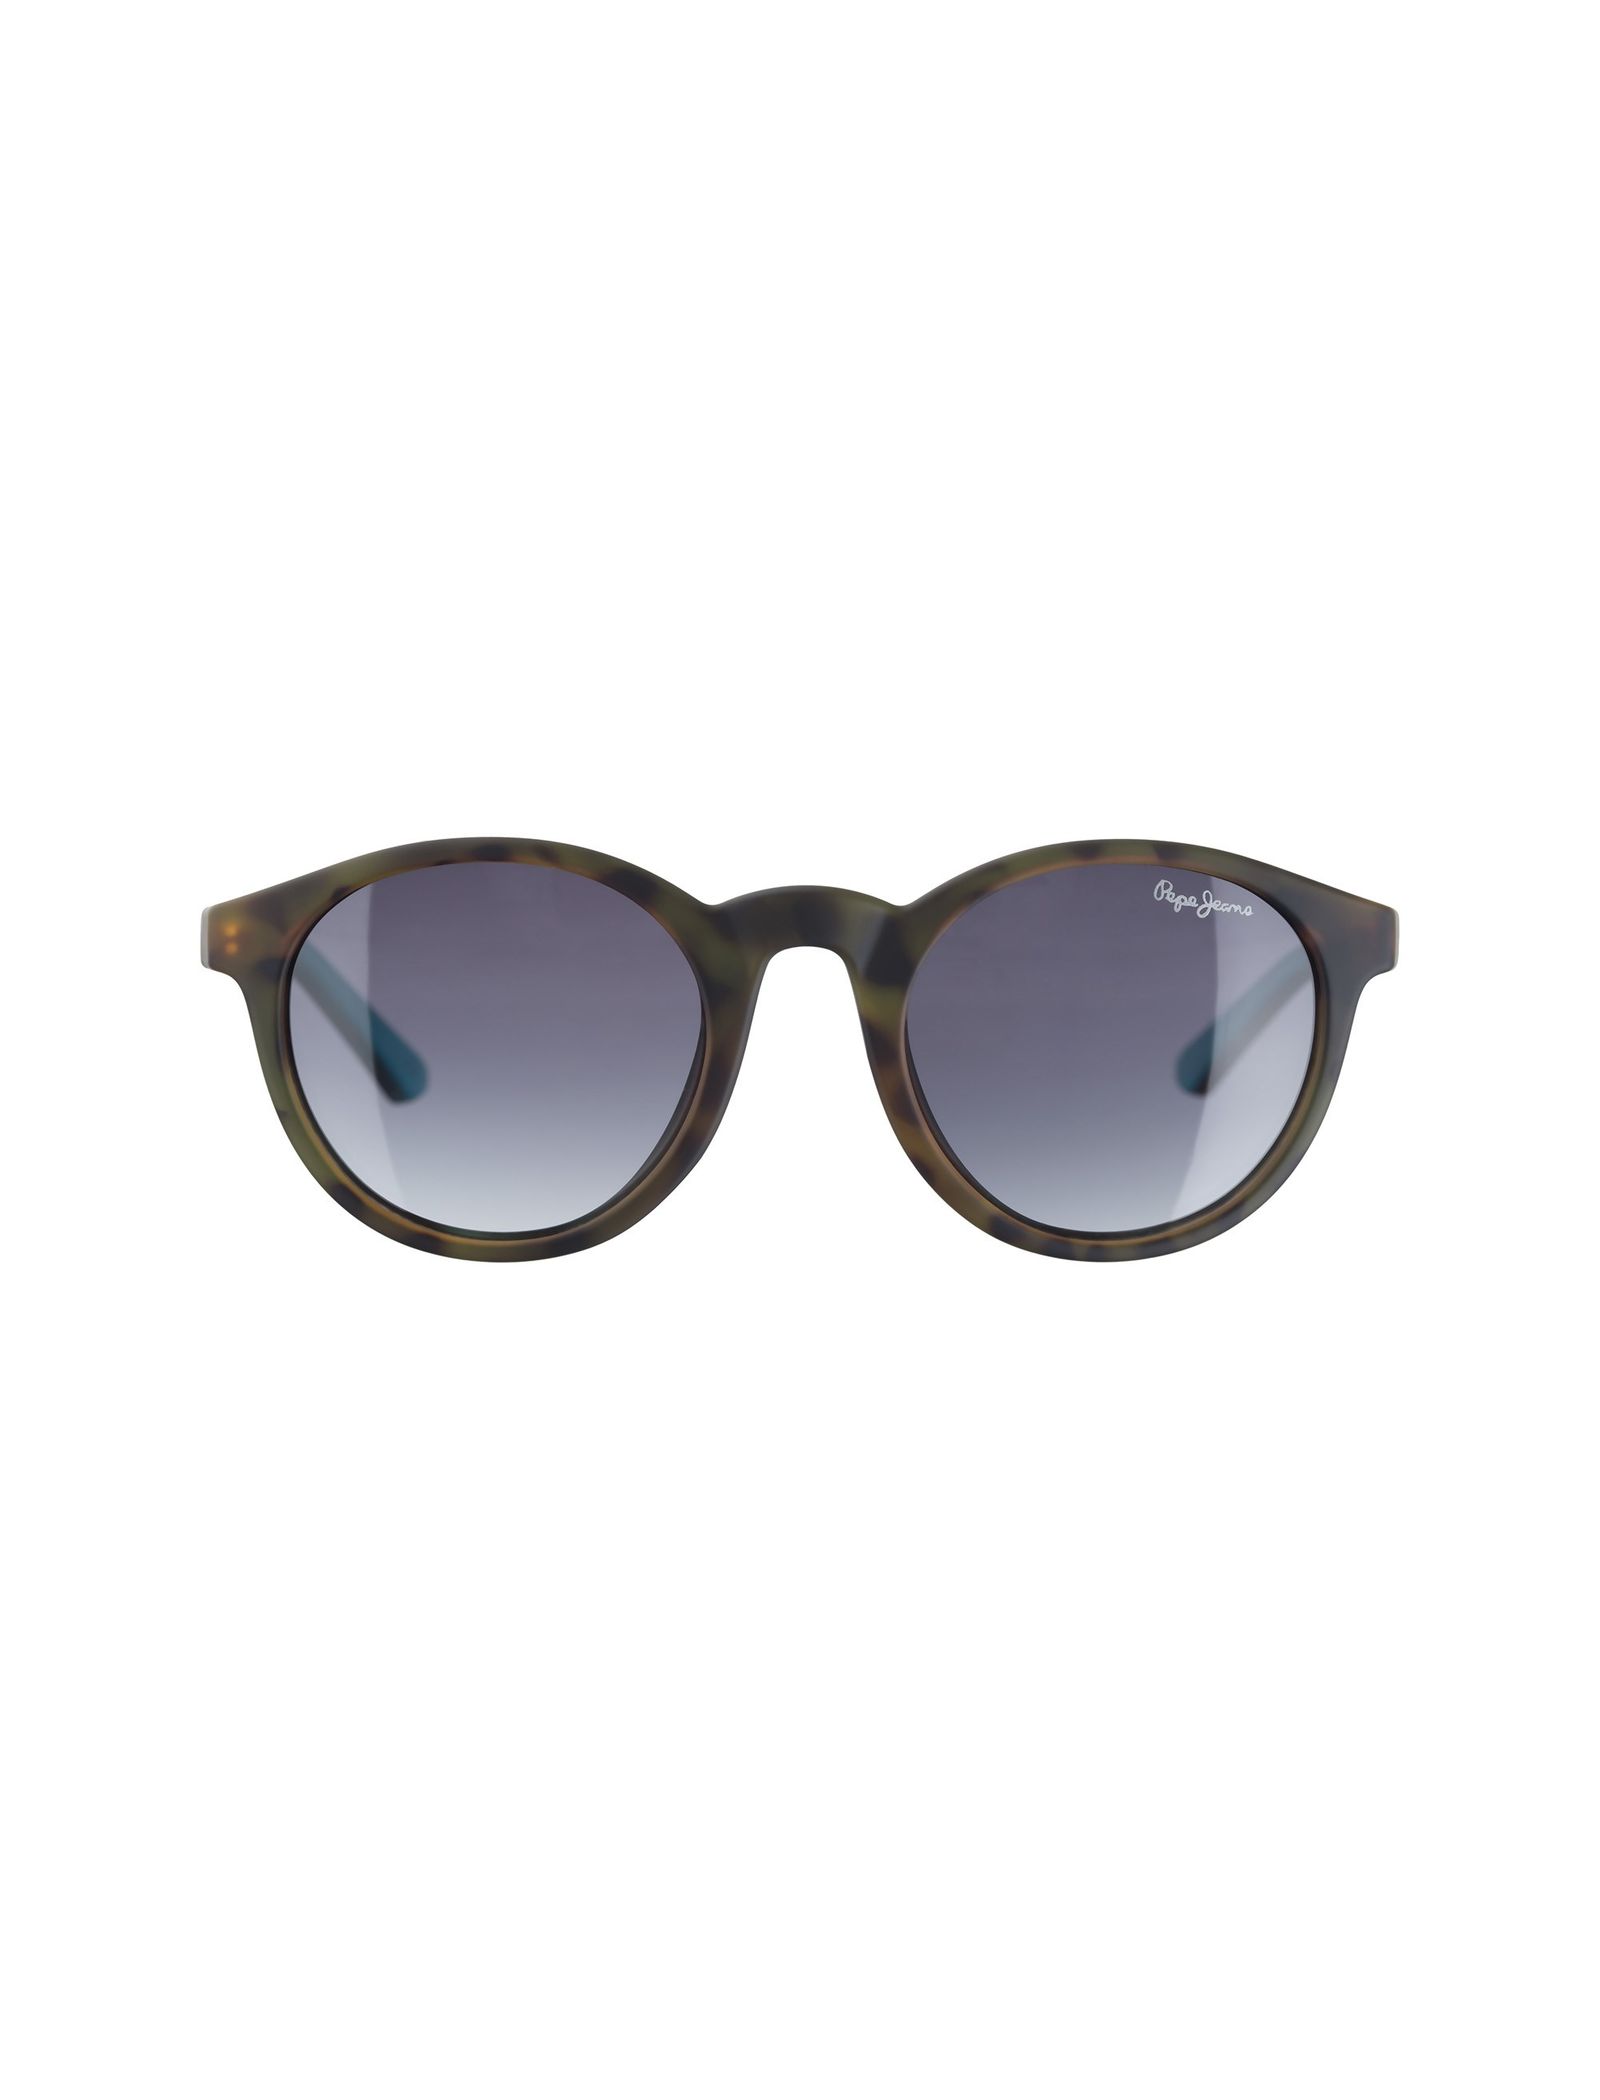 عینک آفتابی پنتوس بچگانه - پپه جینز - قهوه اي - 1